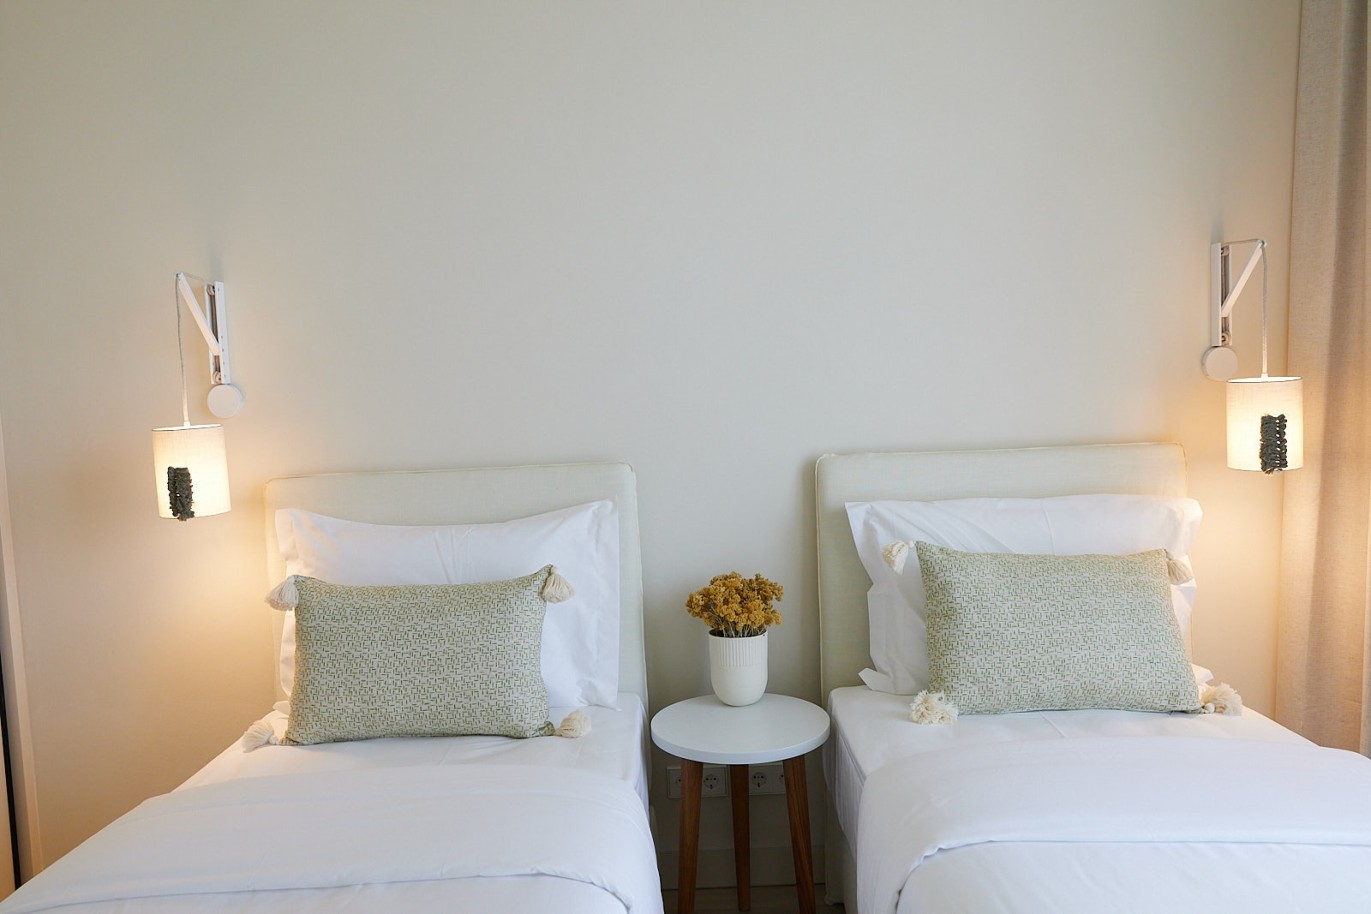 2 bedroom apartment in resort, for sale in Porches, Algarve_229256